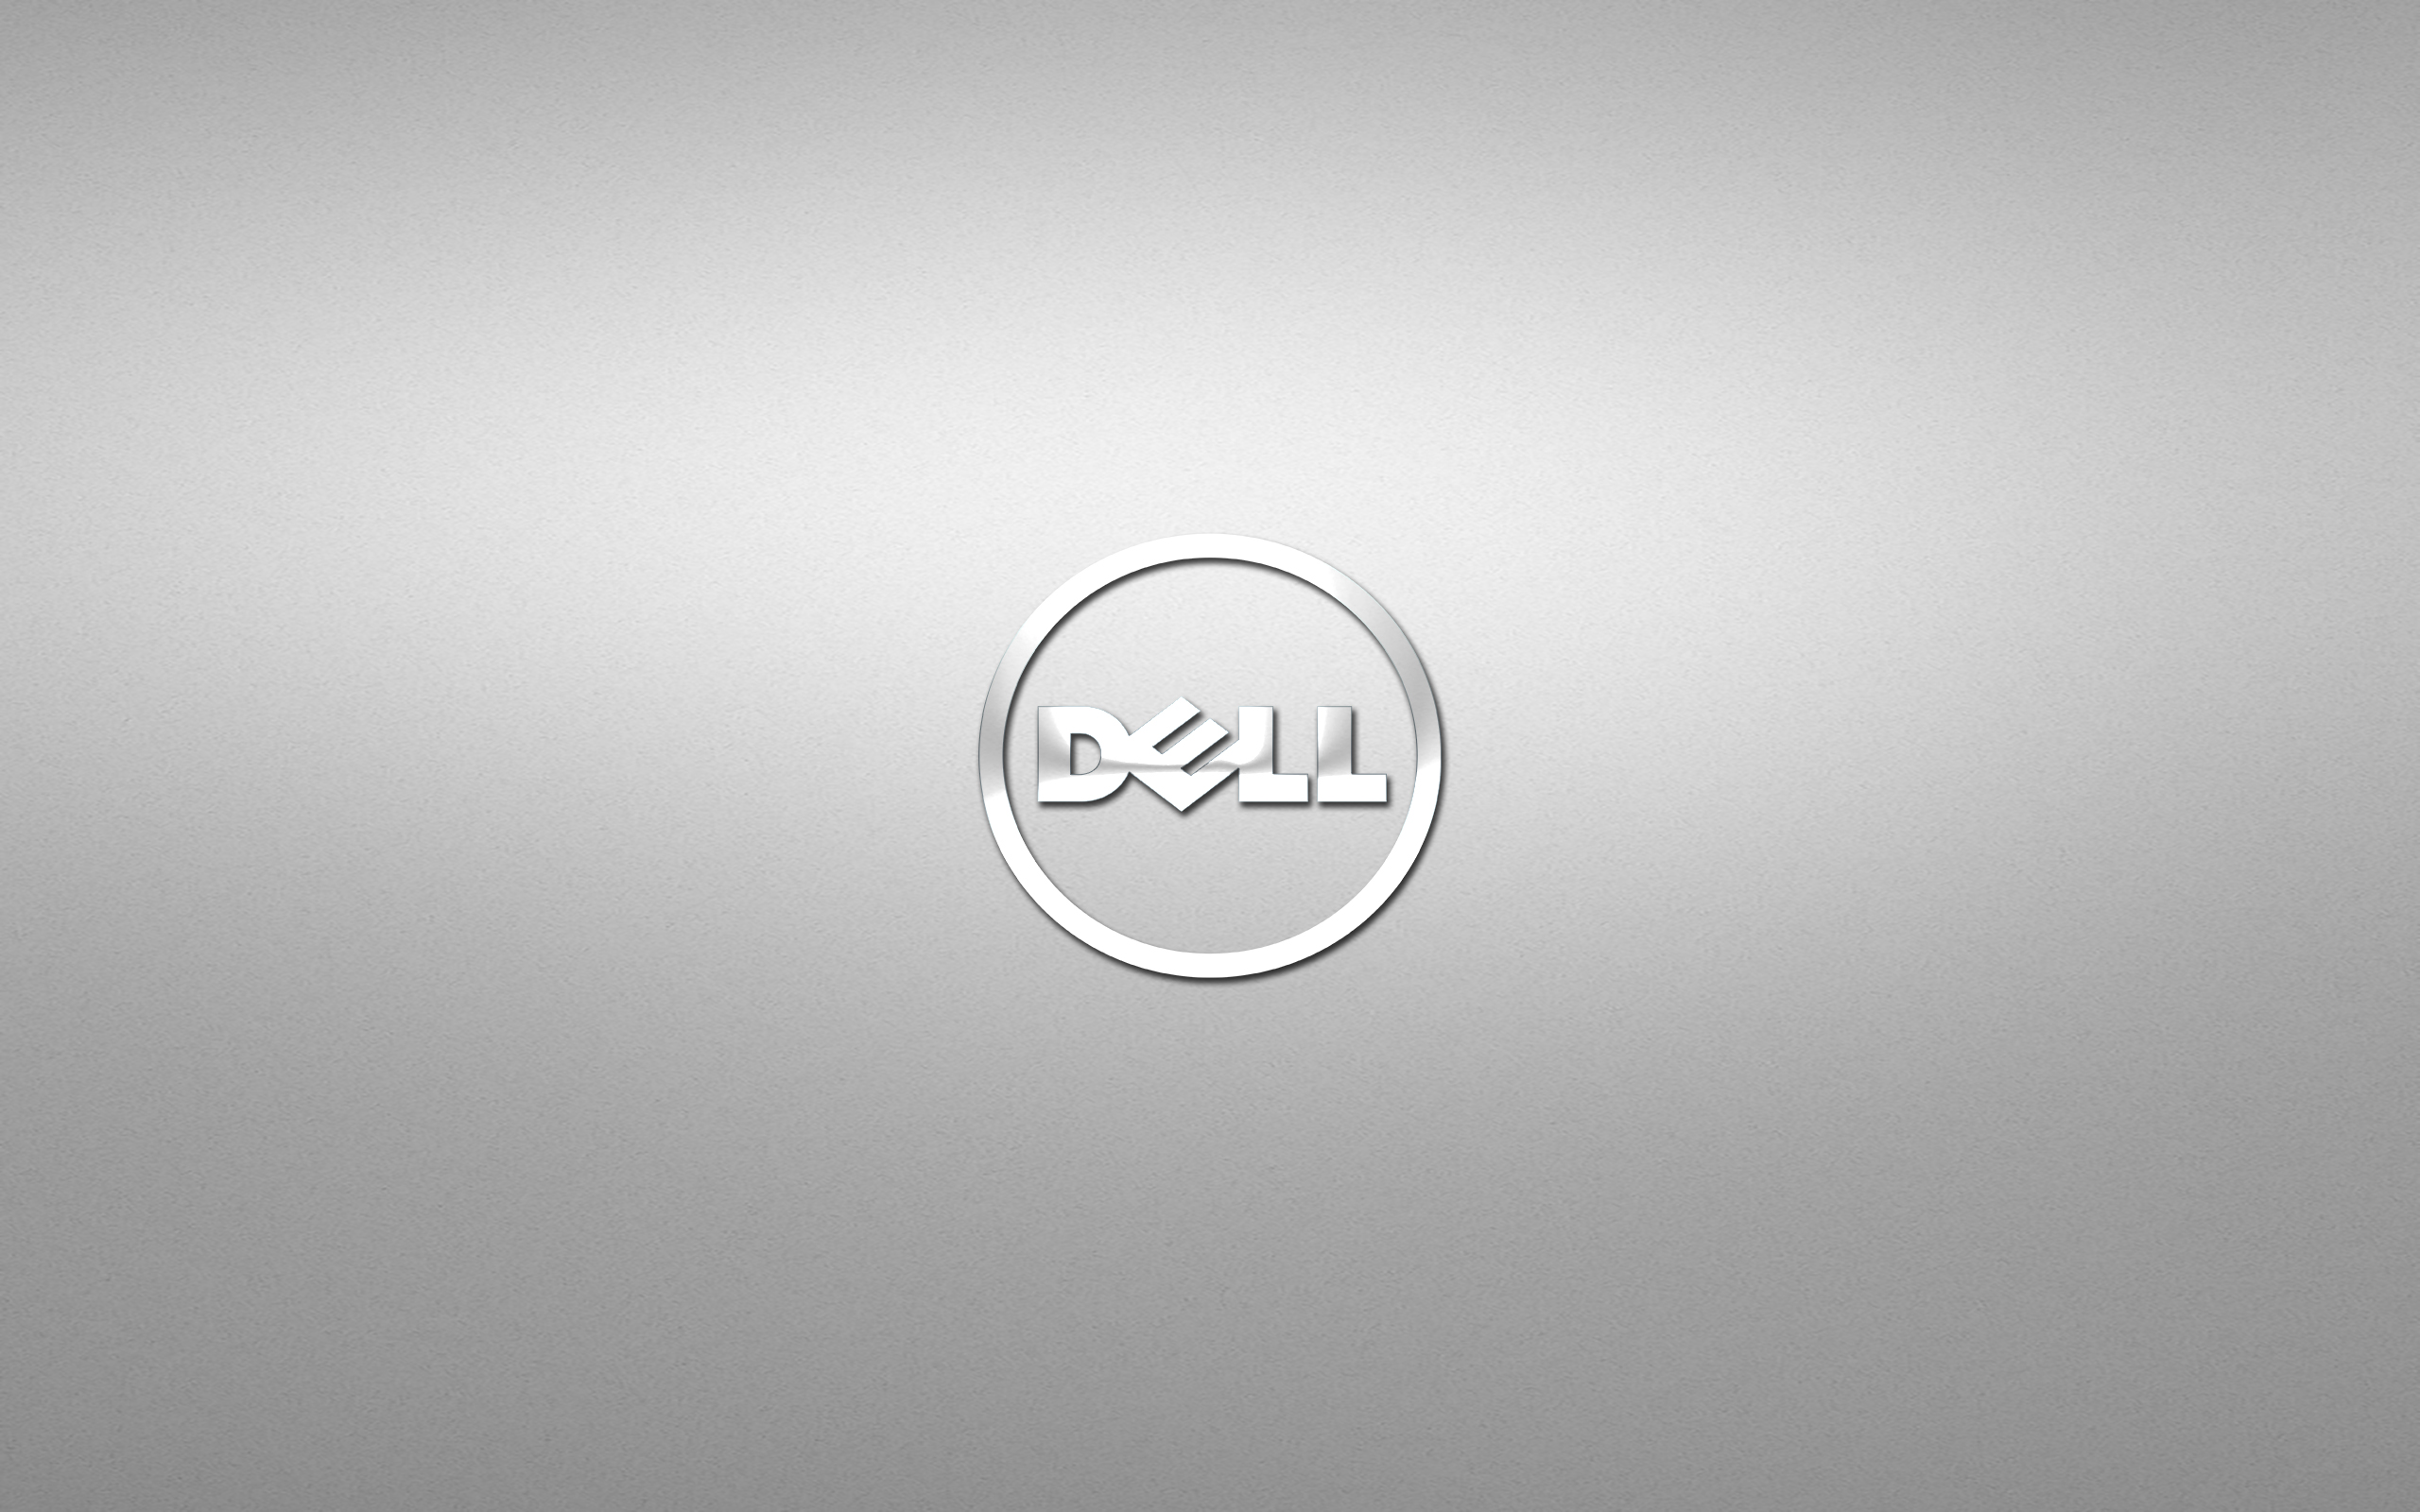 General 2560x1600 Dell logo digital art minimalism simple background